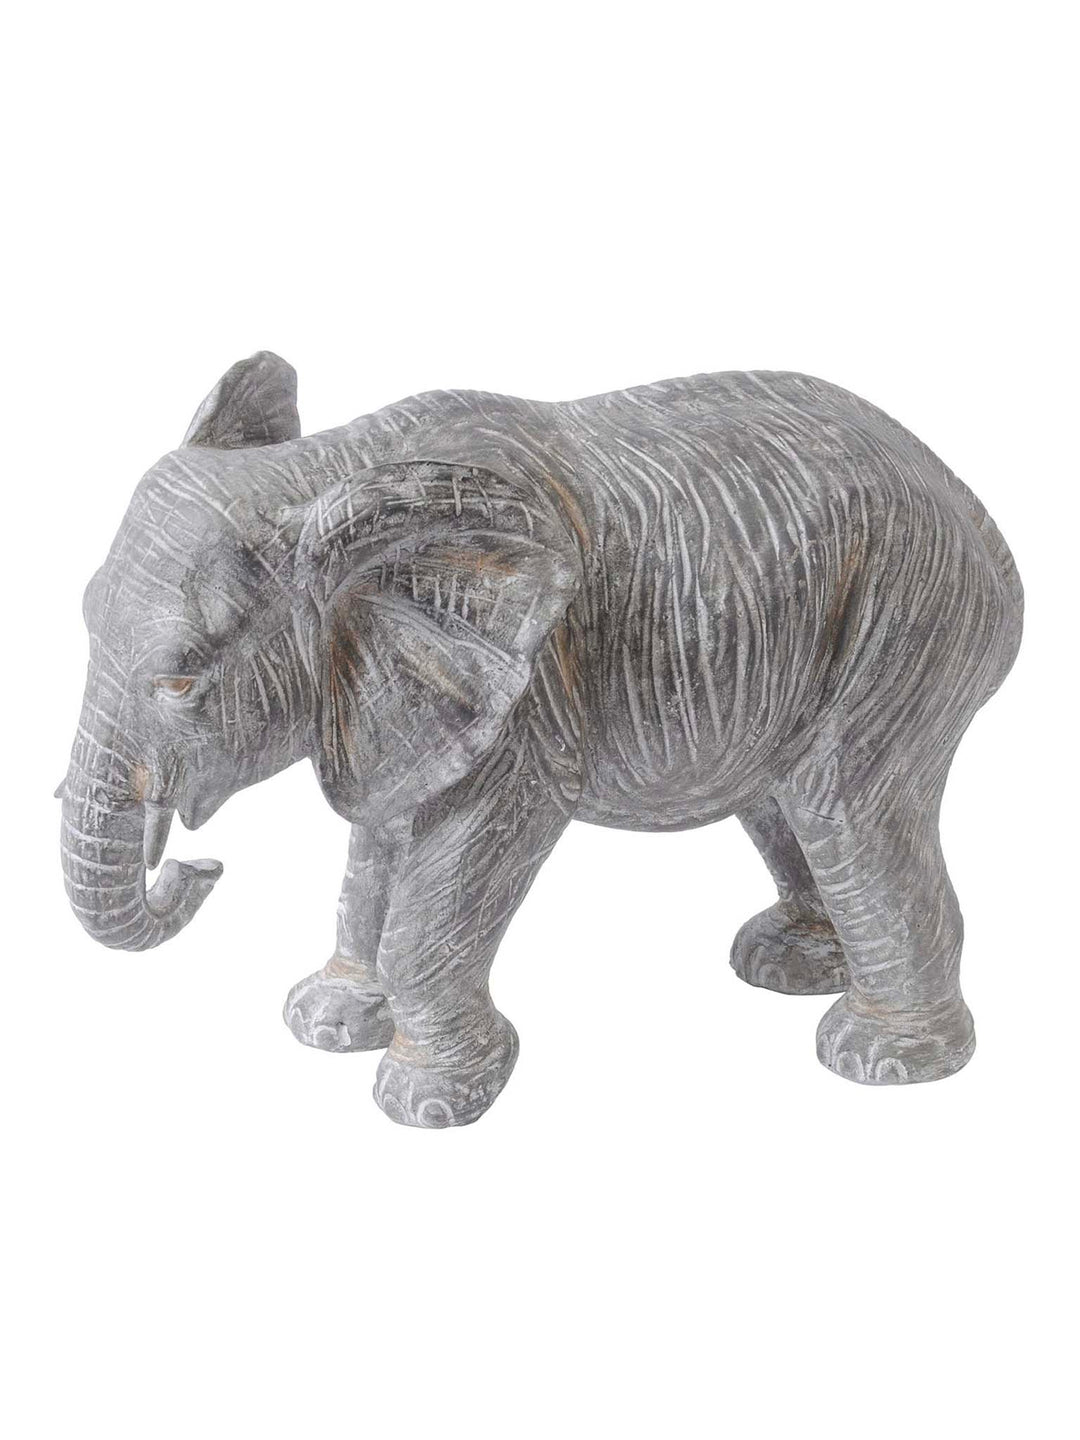 elephant figuring, grey elephant, small elephant, Asian elephant statue 